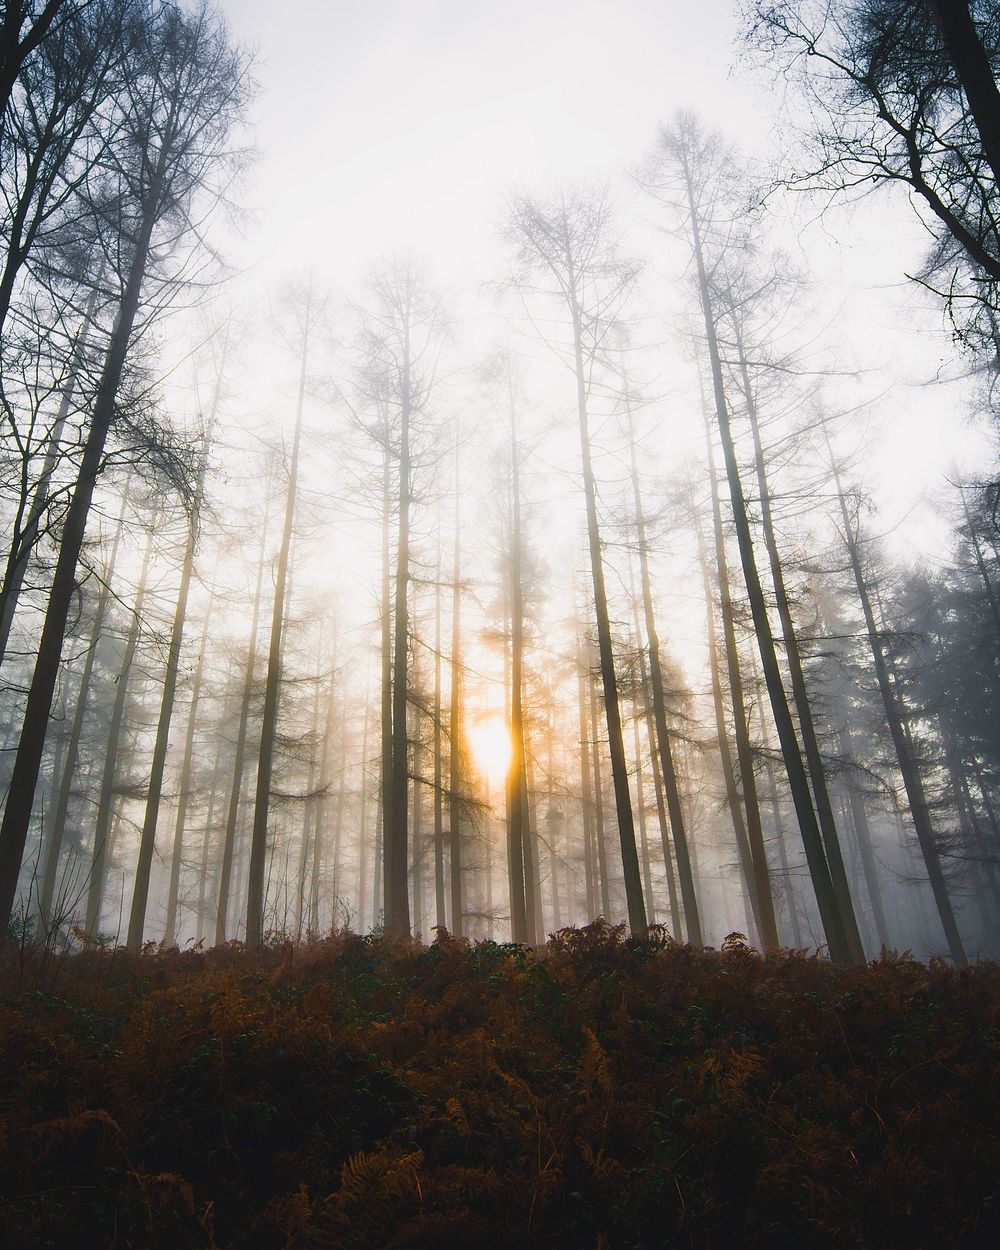 Sunlight shining through the misty woods